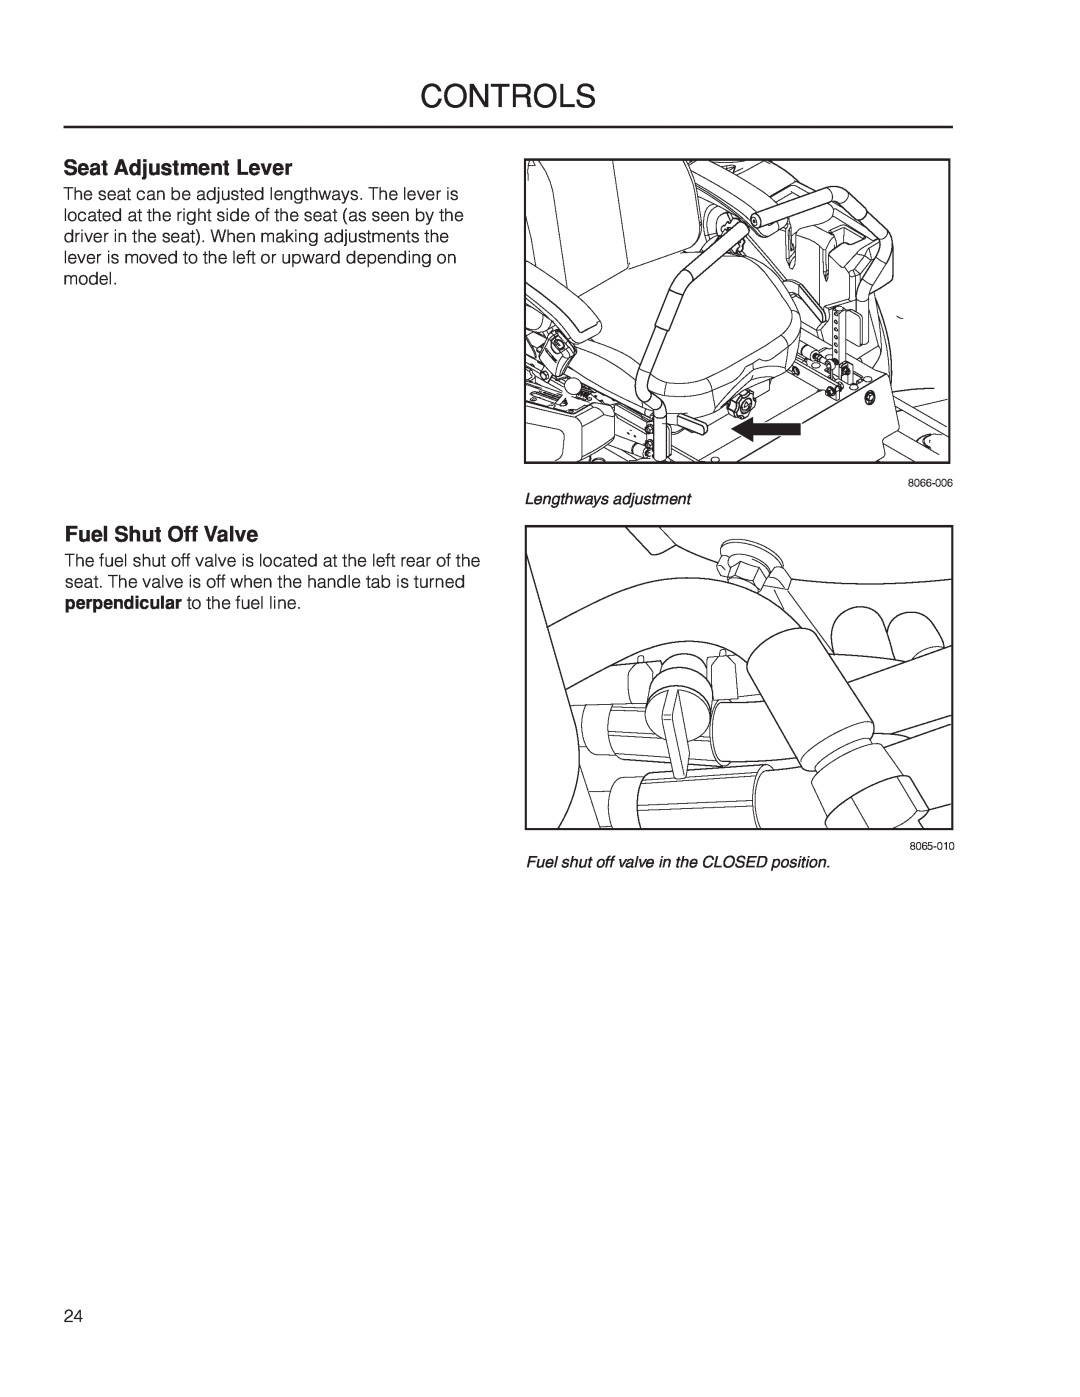 Yazoo/Kees ZPKW5426 manual Seat Adjustment Lever, Fuel Shut Off Valve, Controls, Lengthways adjustment 